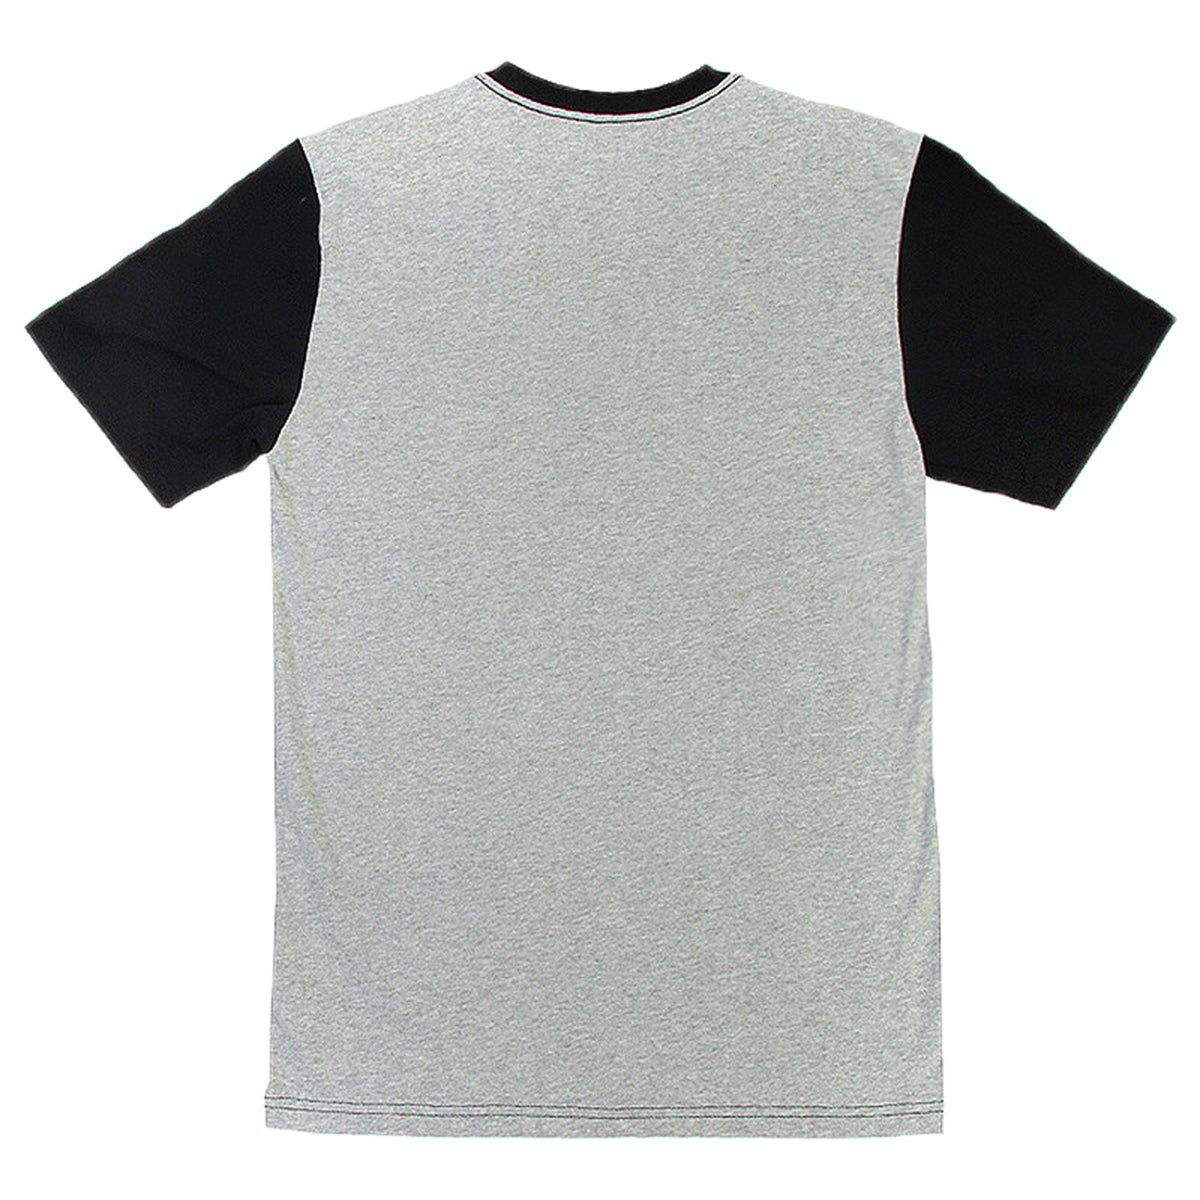 Nike Kobe Masterpiece Sheath T-shirt Mens Style : 589488